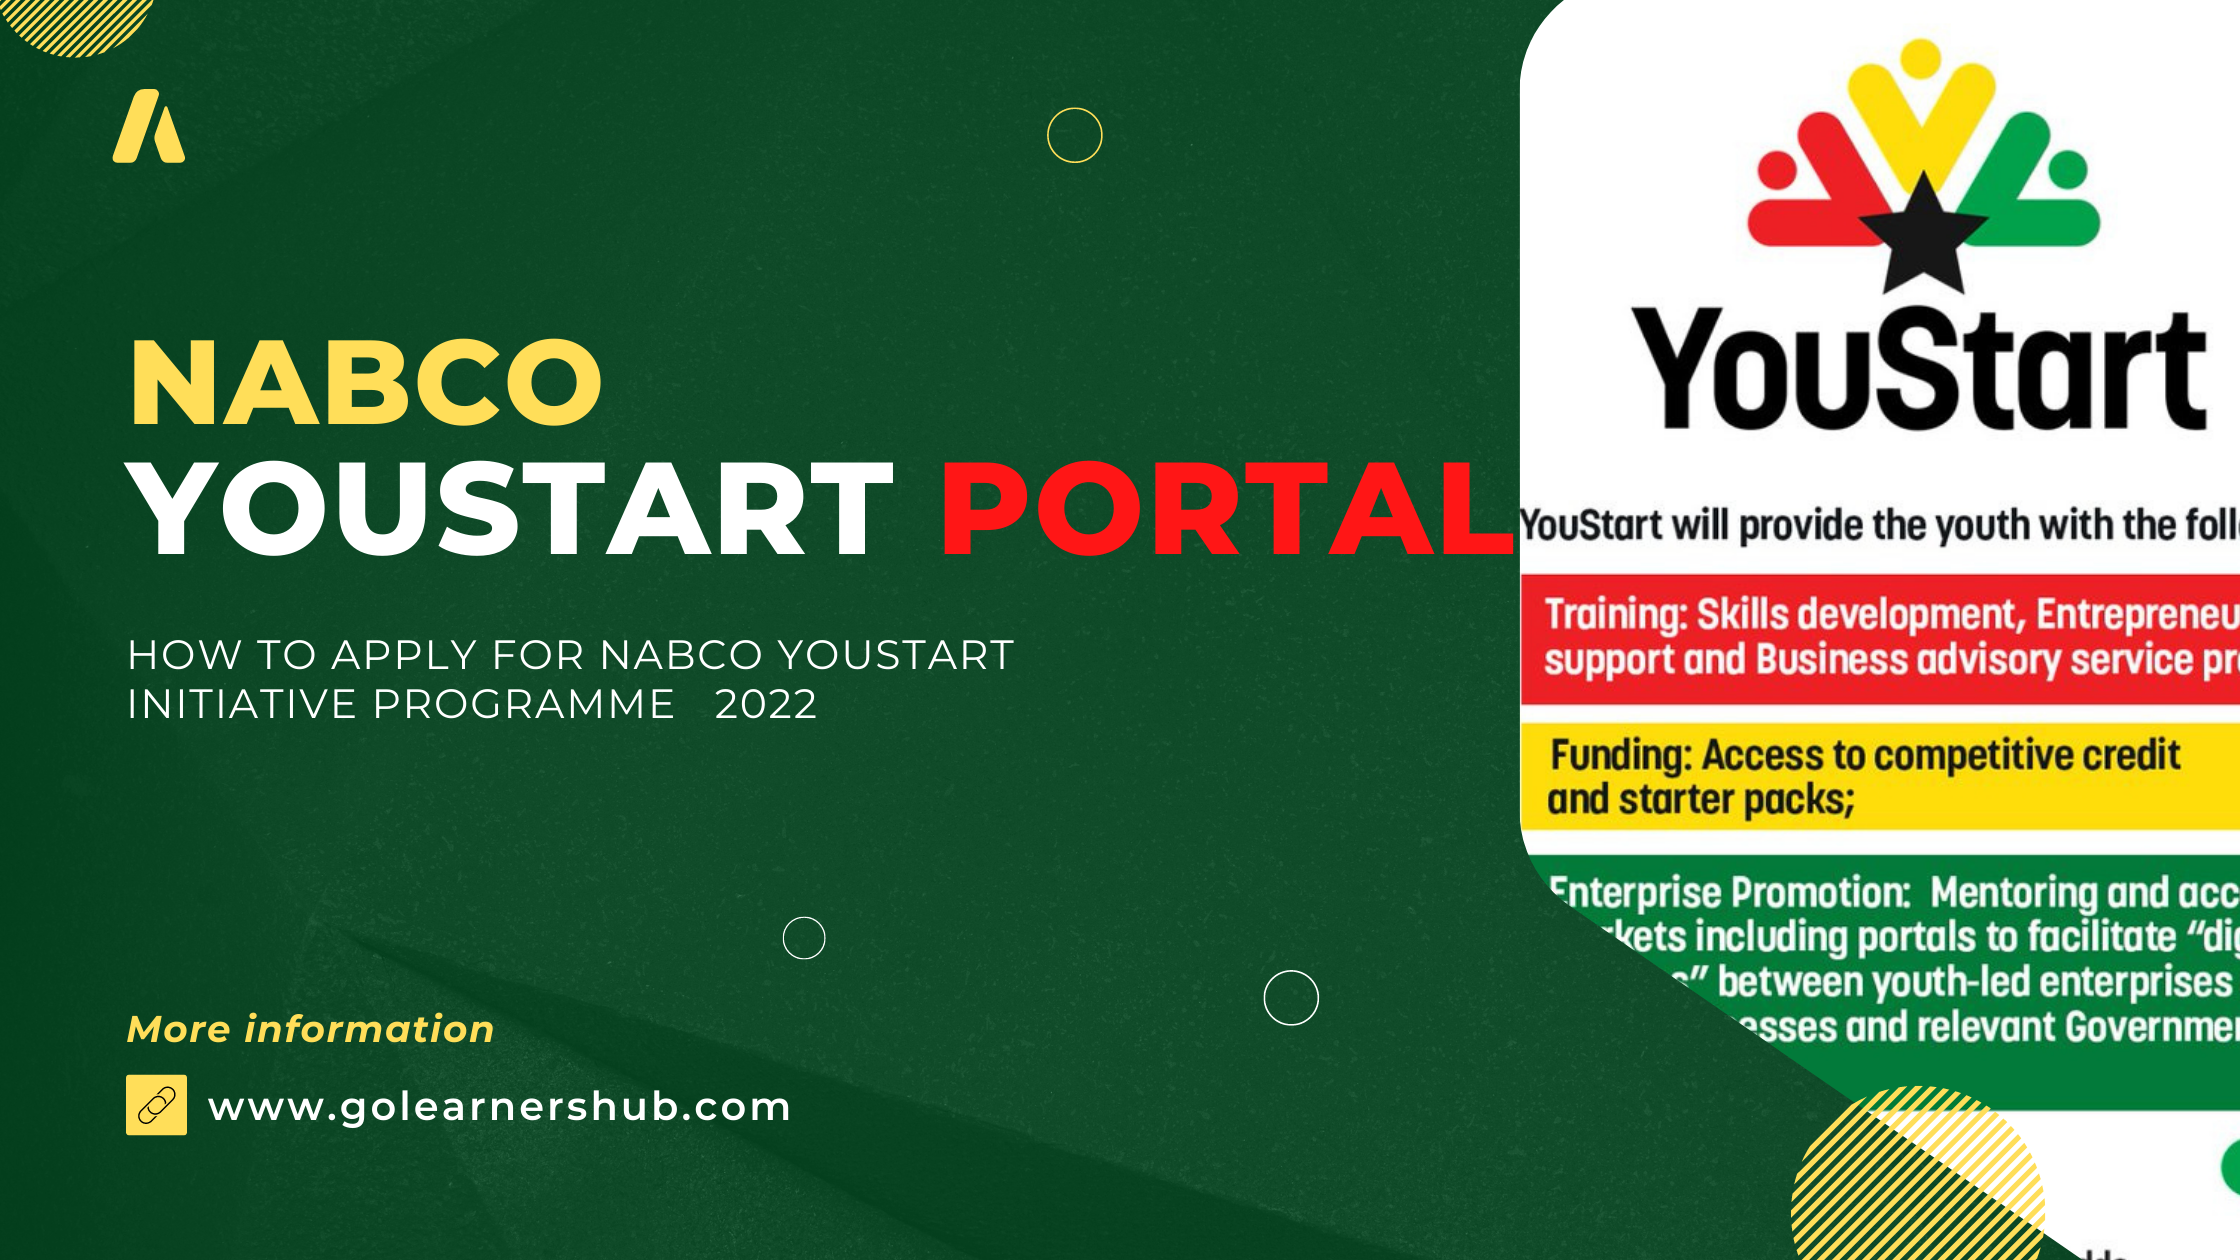 NABCO YouStart Application Portal